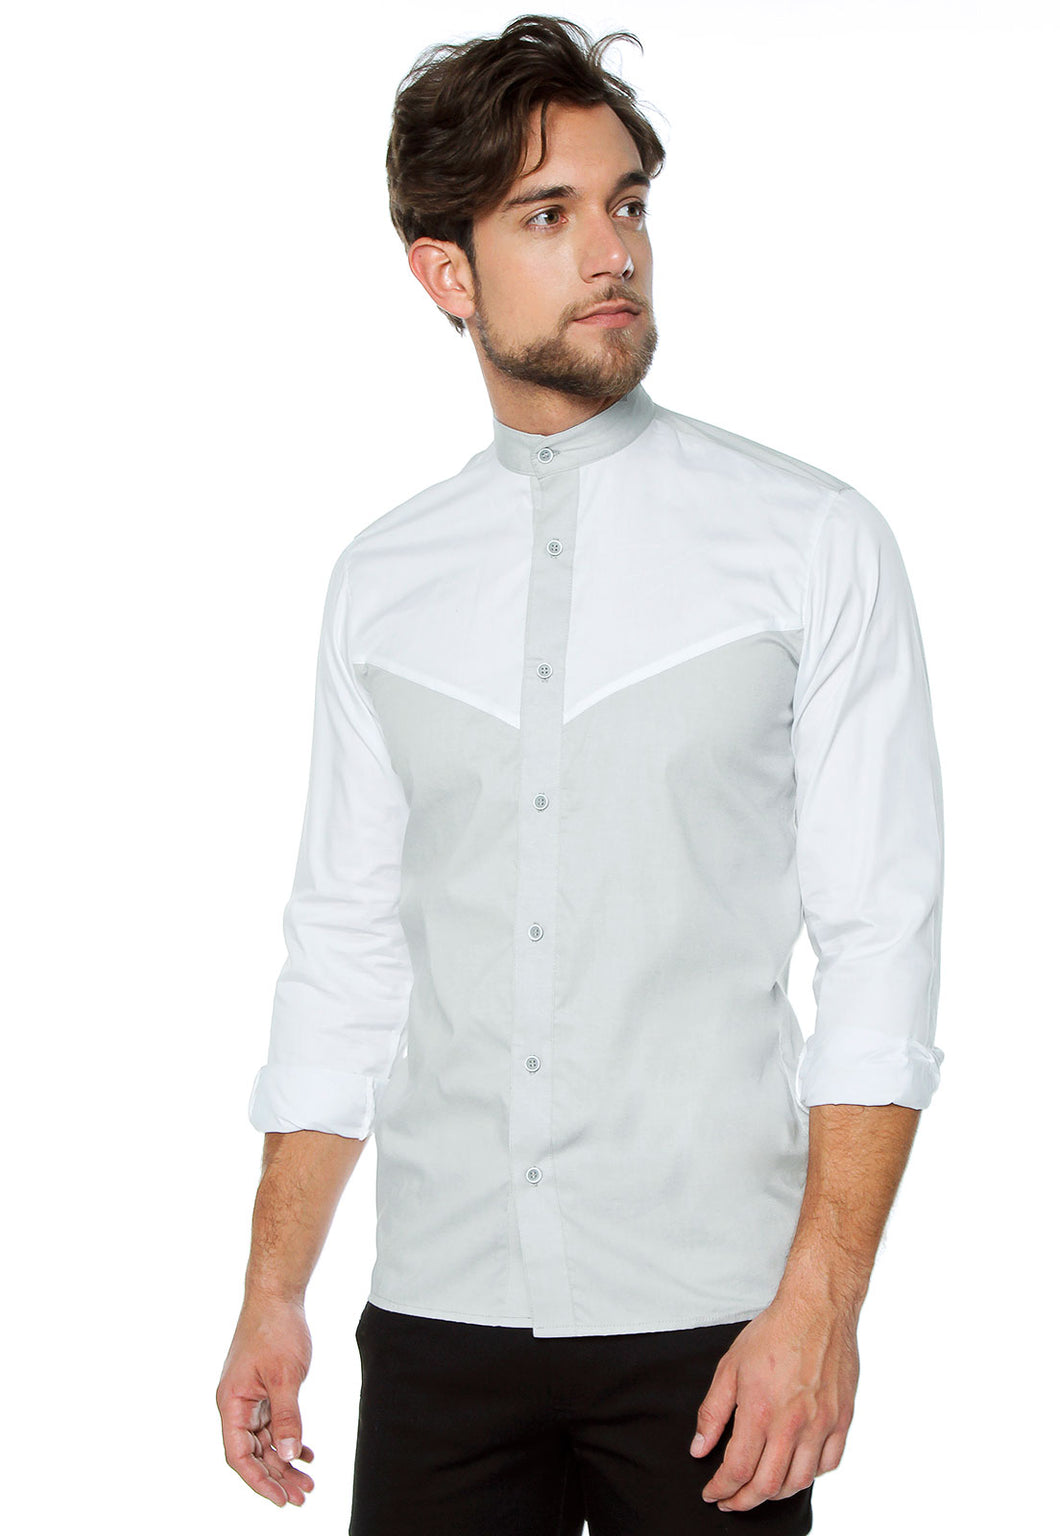 Modern Shirt Grey & White!